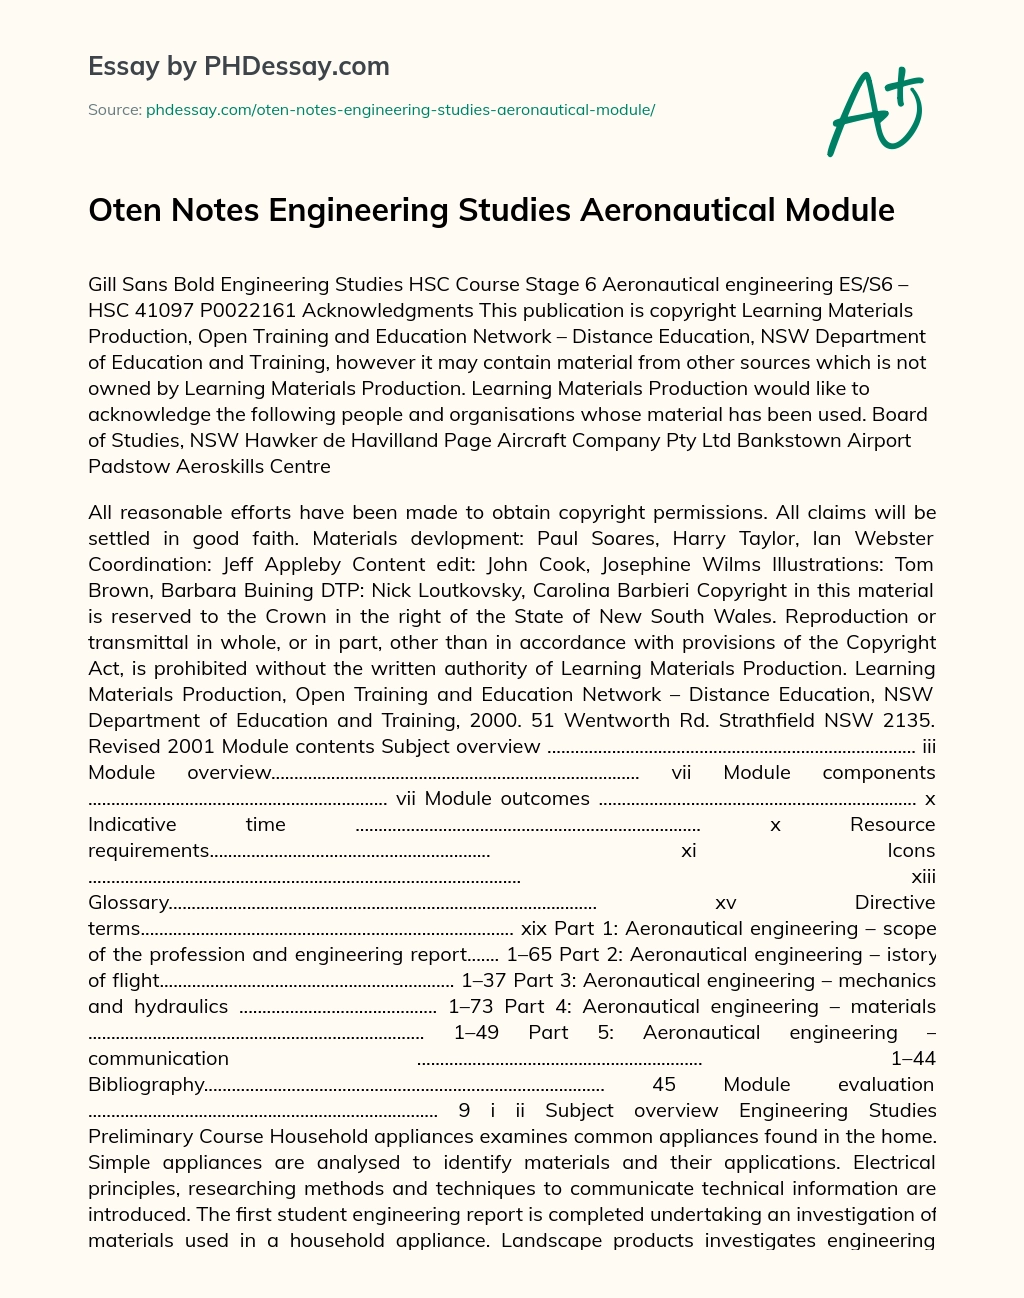 Oten Notes Engineering Studies Aeronautical Module essay